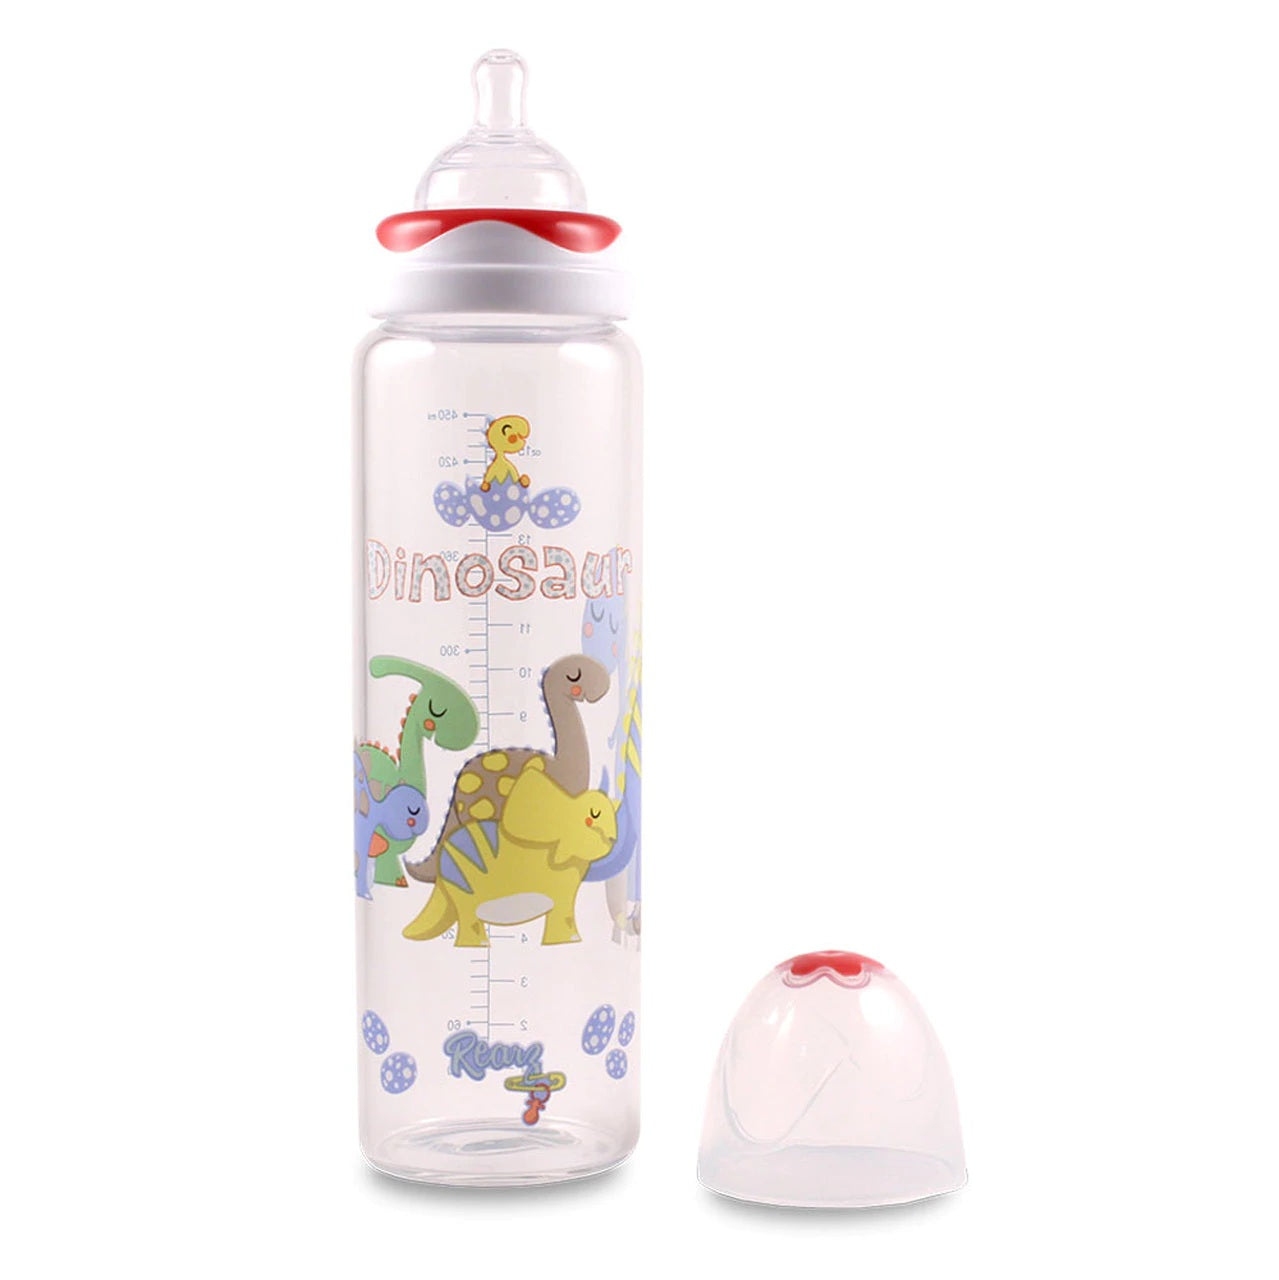 The Dinosaur Glass Adult Baby Bottle.